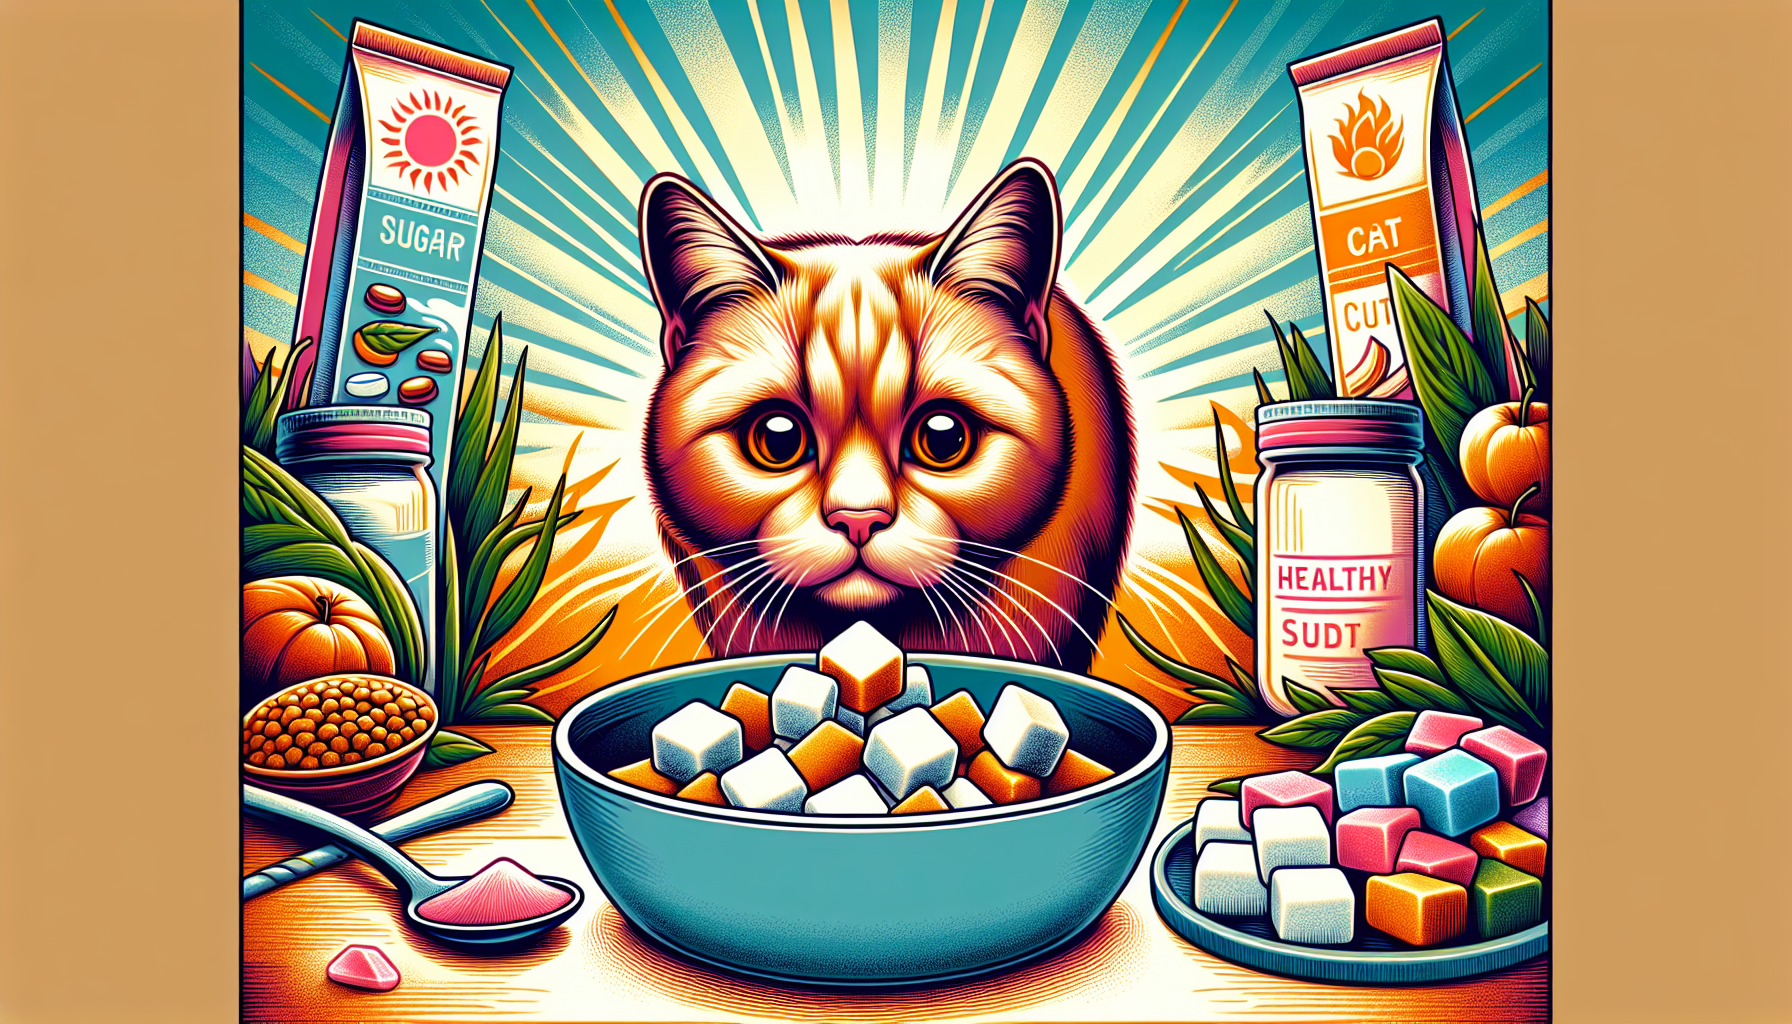 Can Cats Eat Sugar